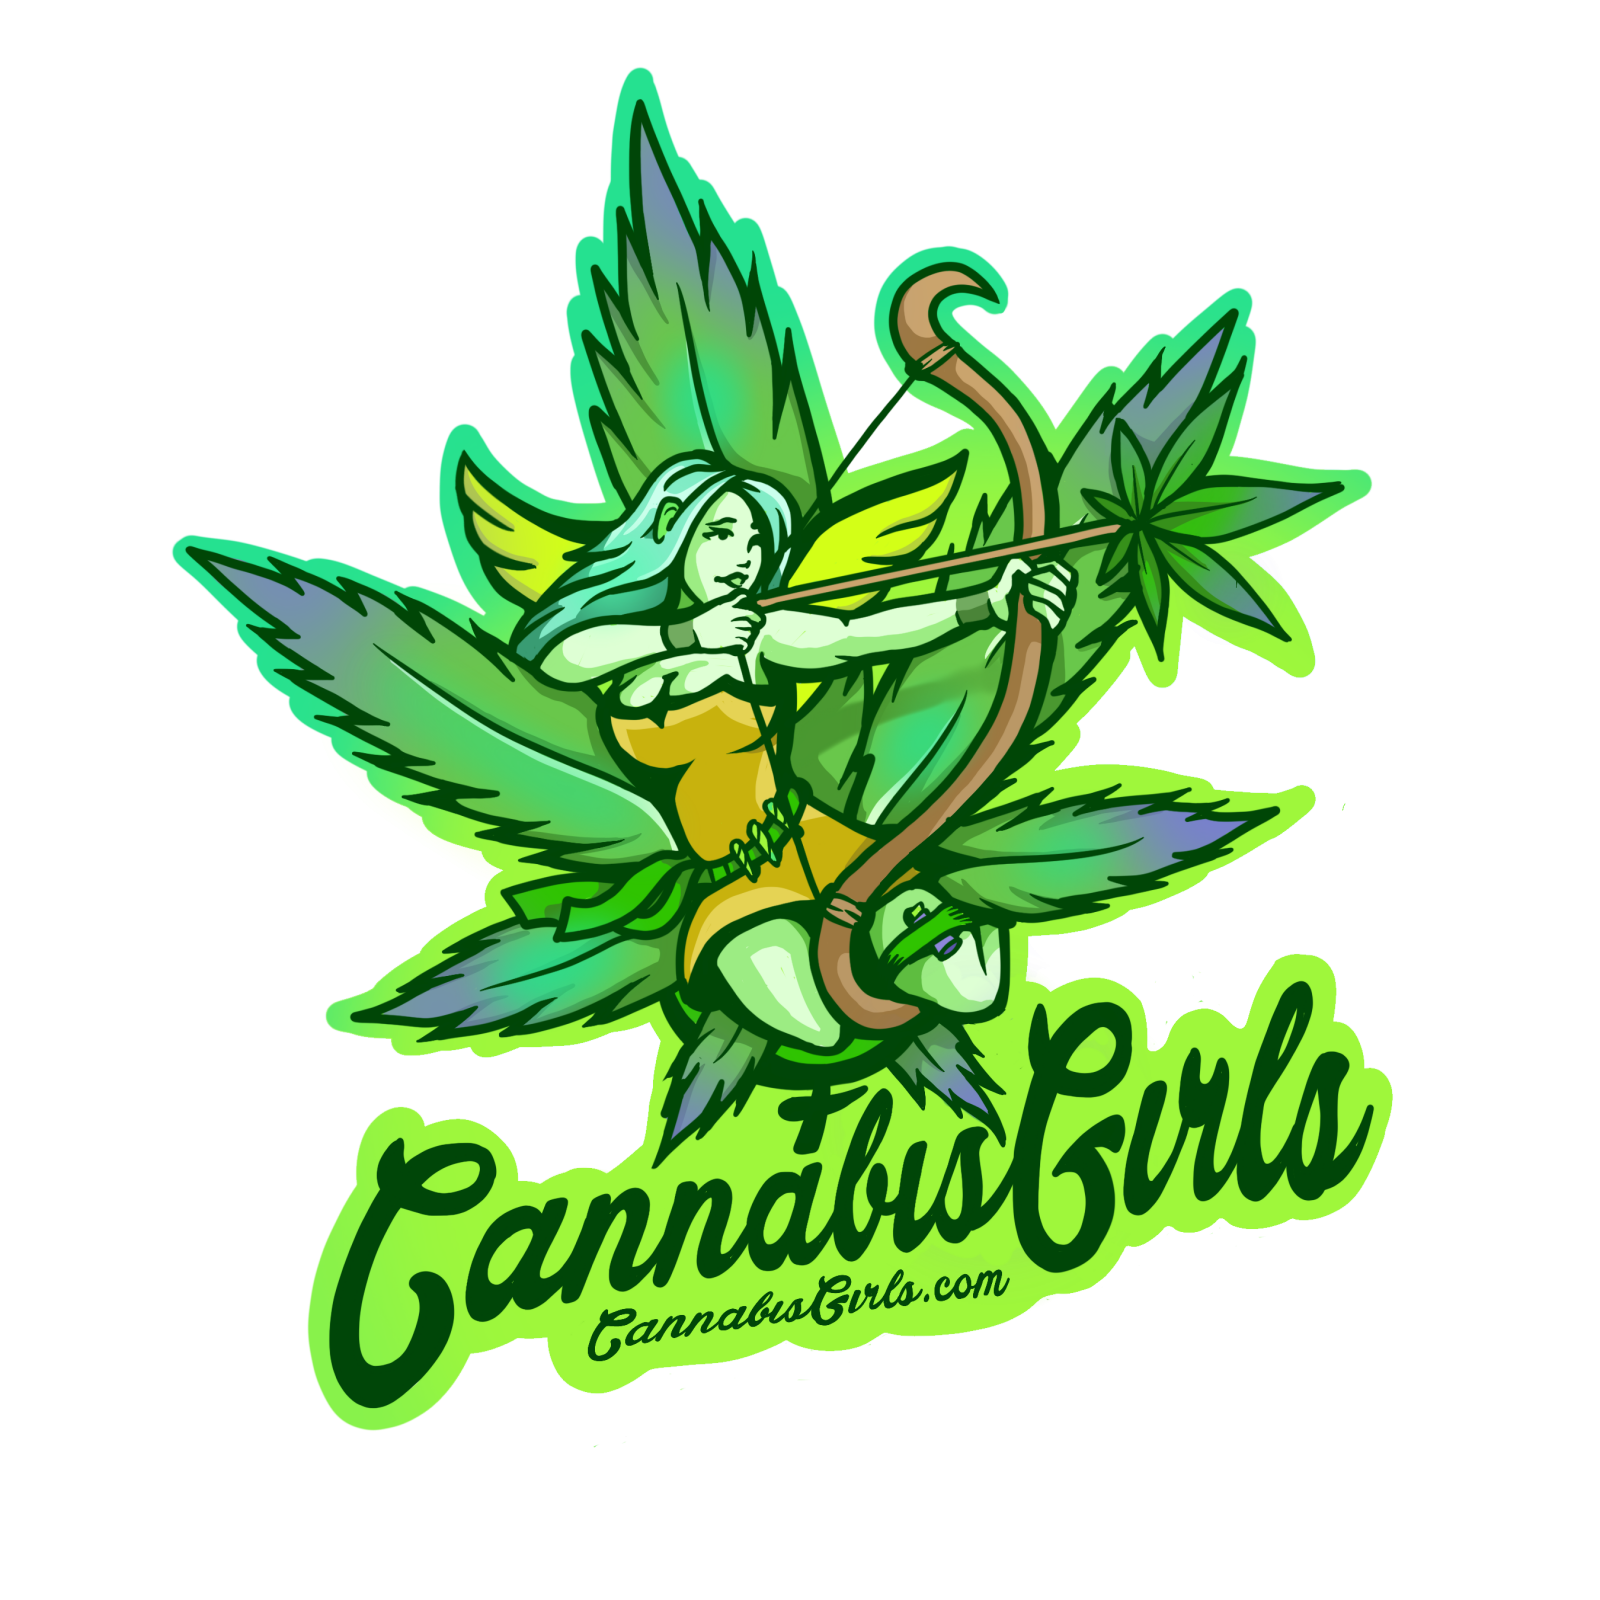 cannabisgirls domain logo